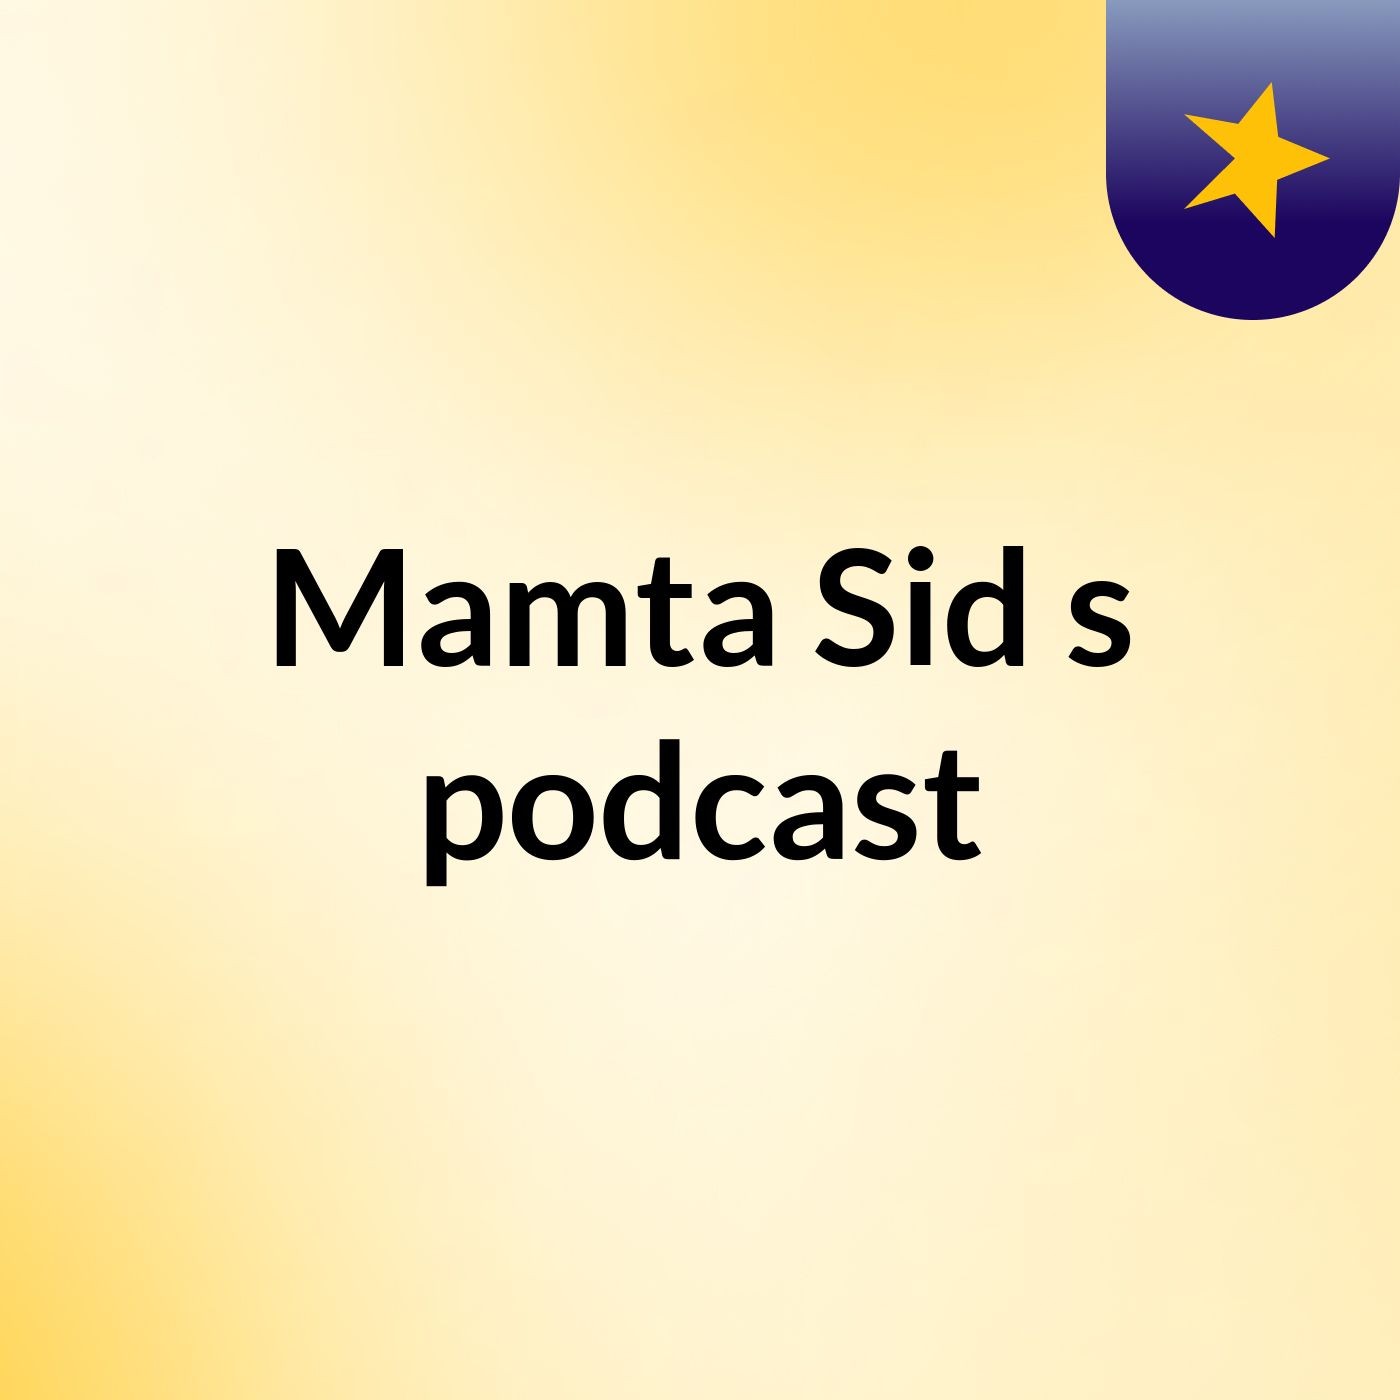 Mamta Sid's podcast